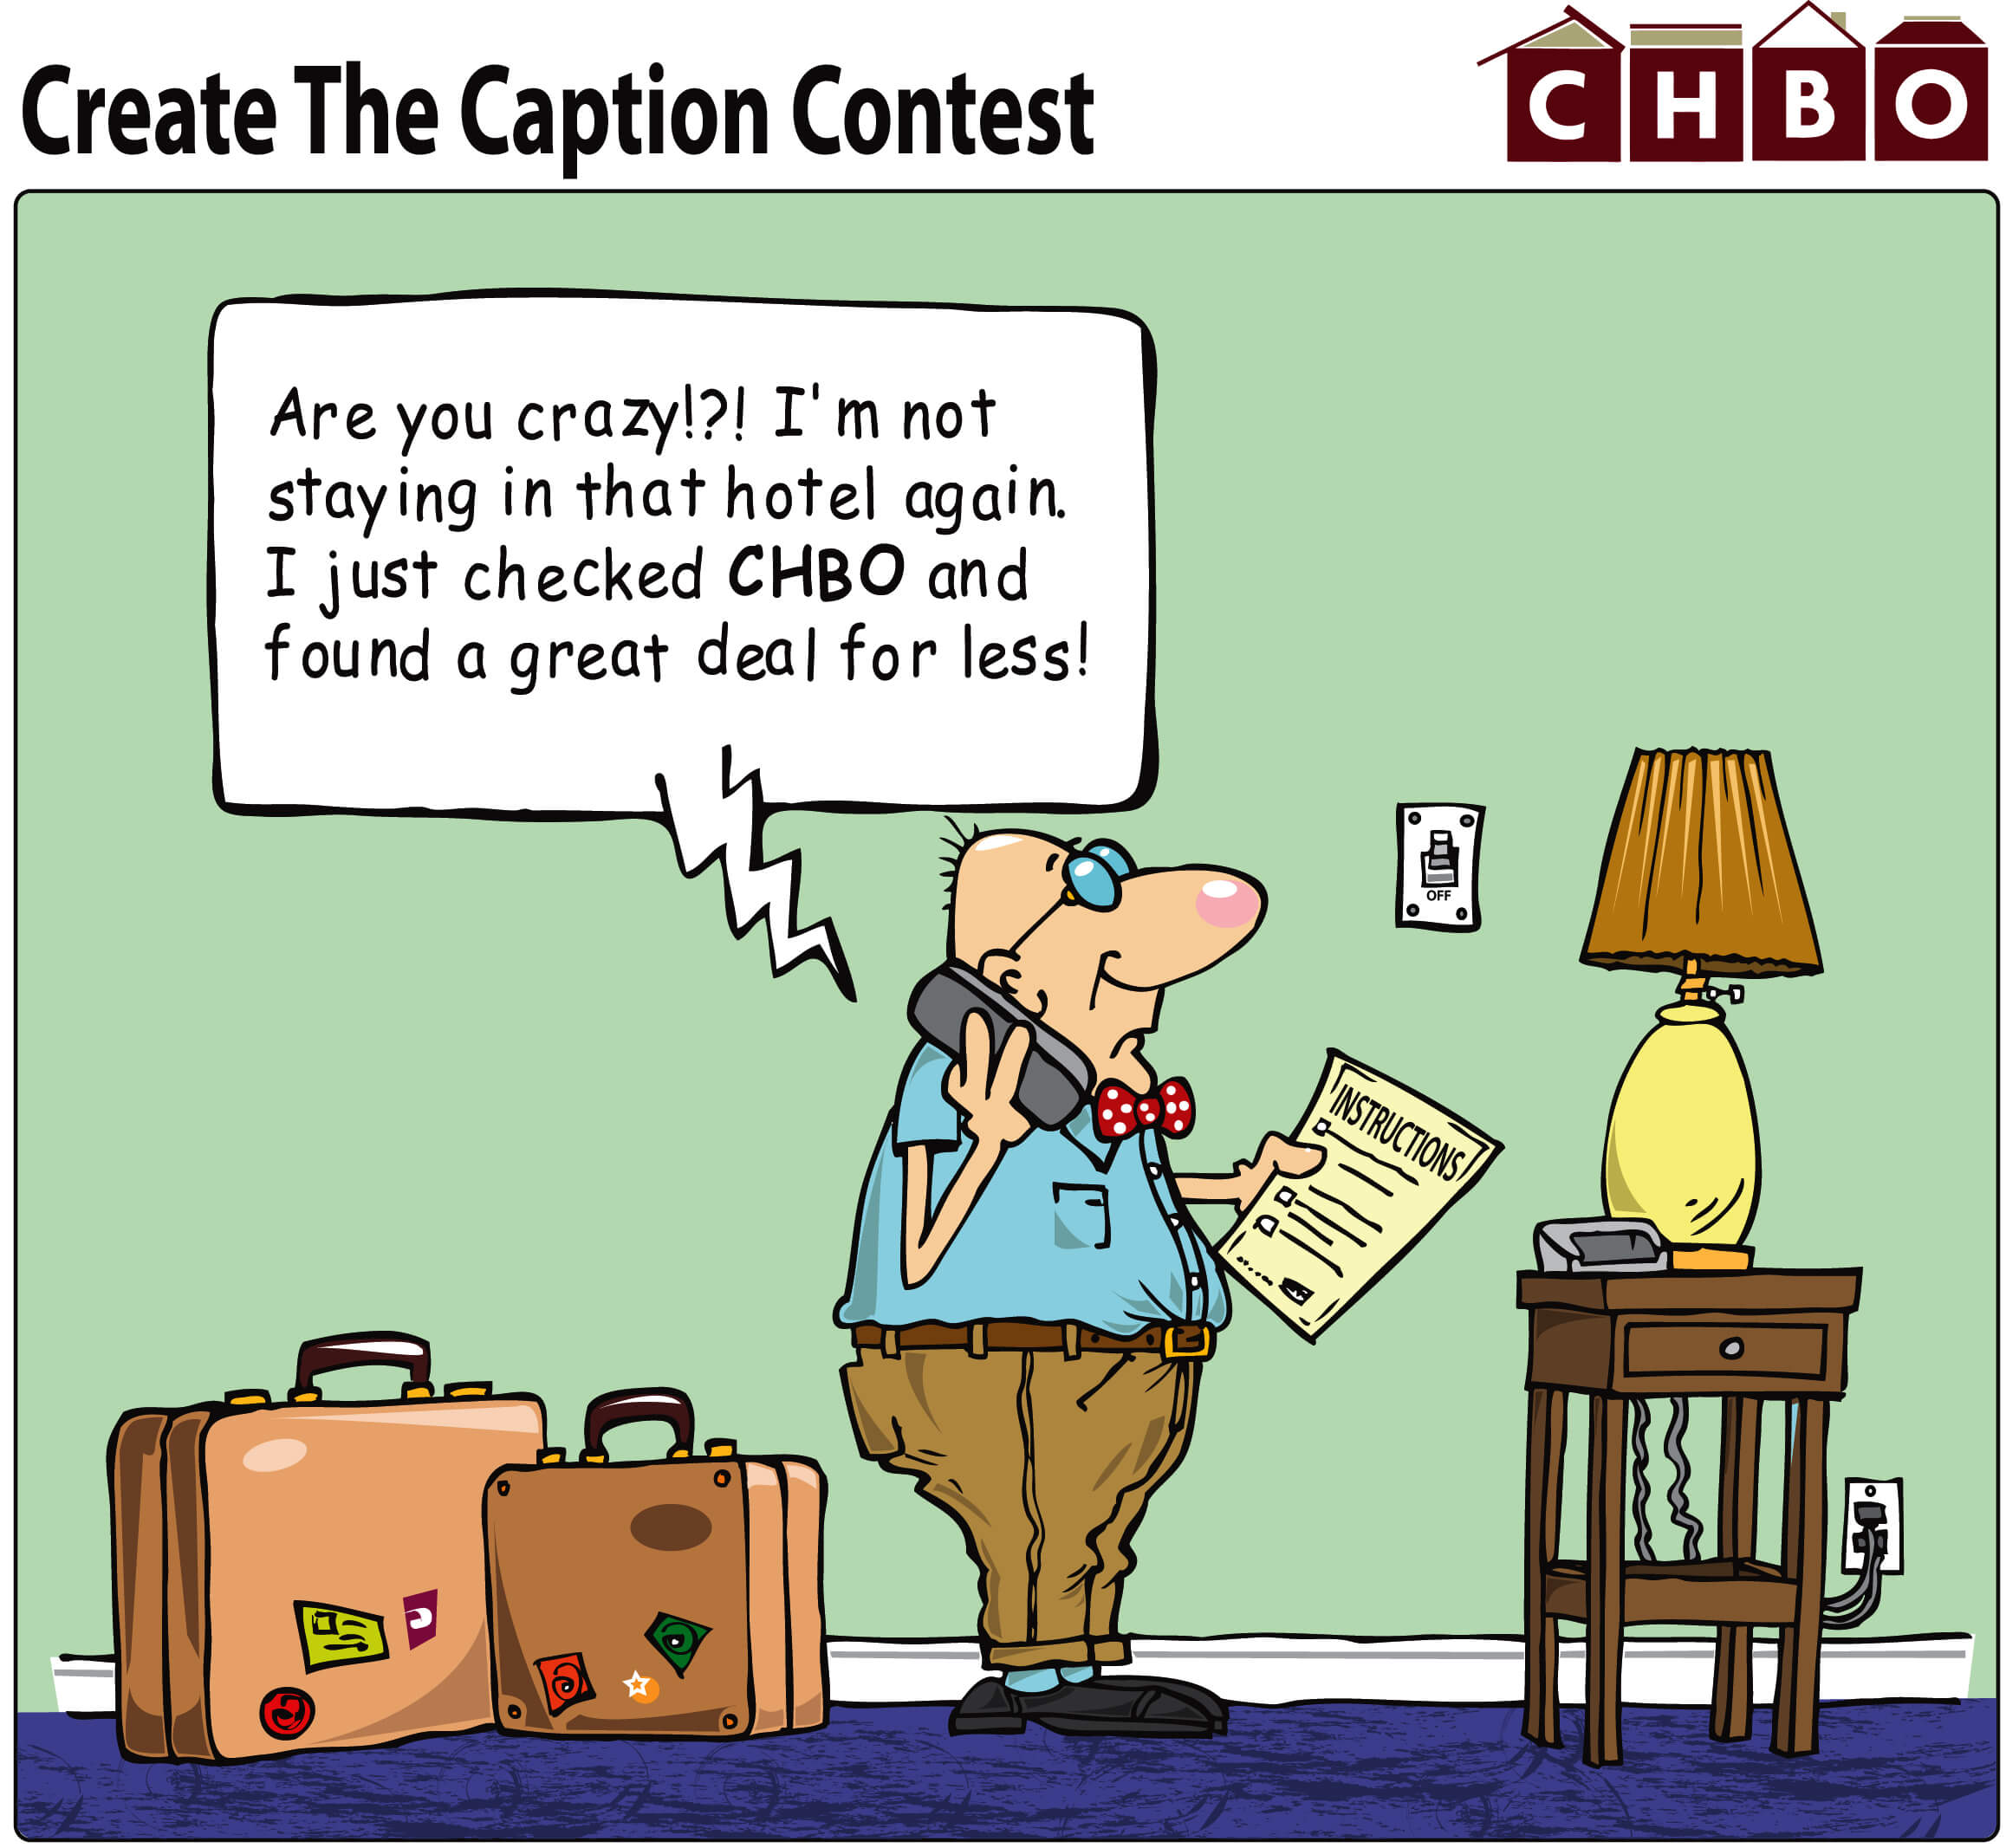 Create the caption contest winner